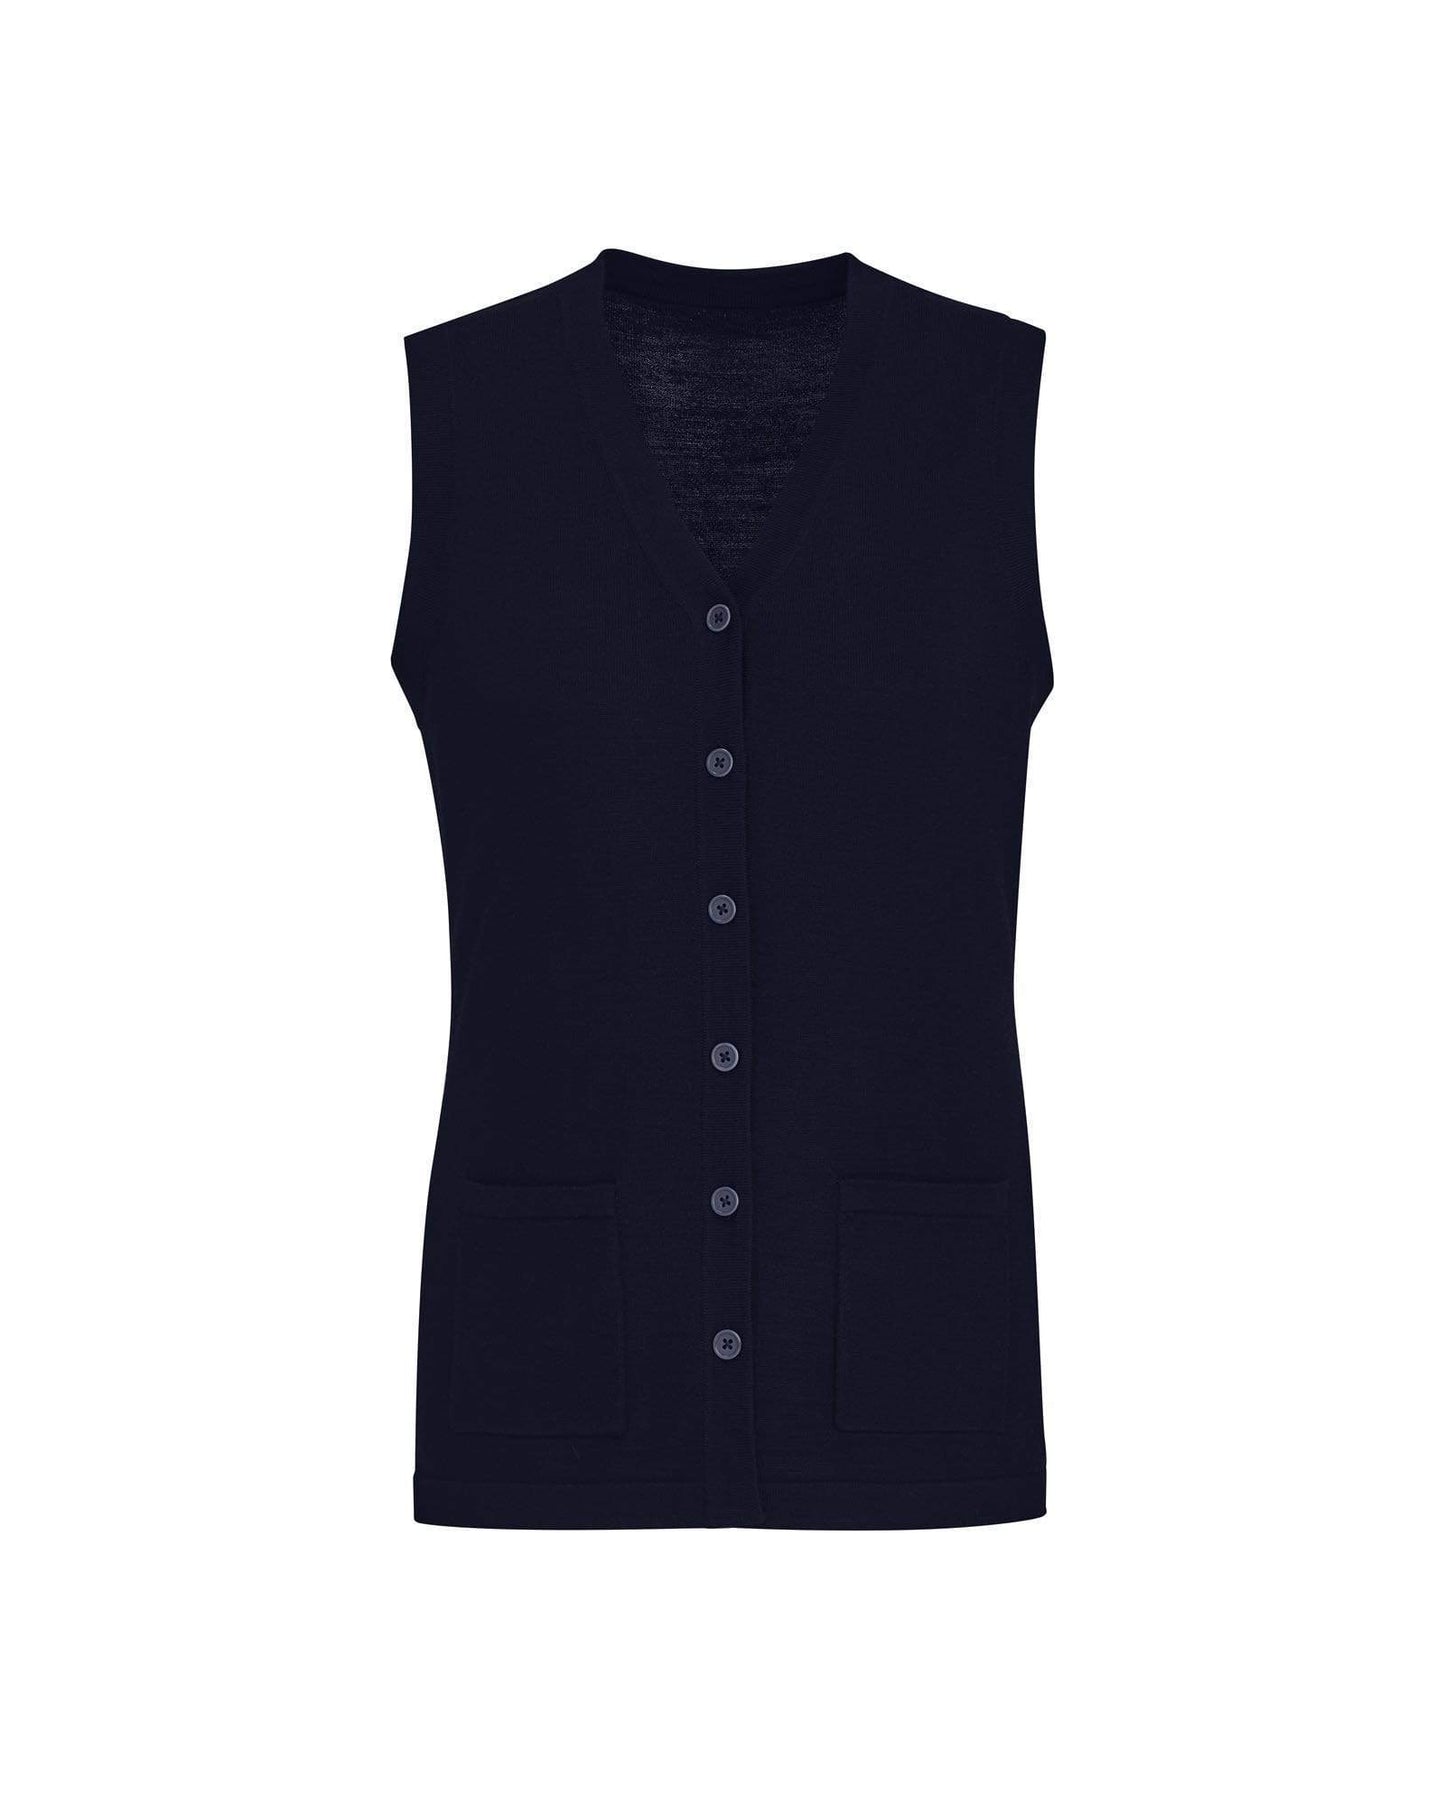 Biz Care Womens Button Front Knit Vest CK961LV - Simply Scrubs Australia